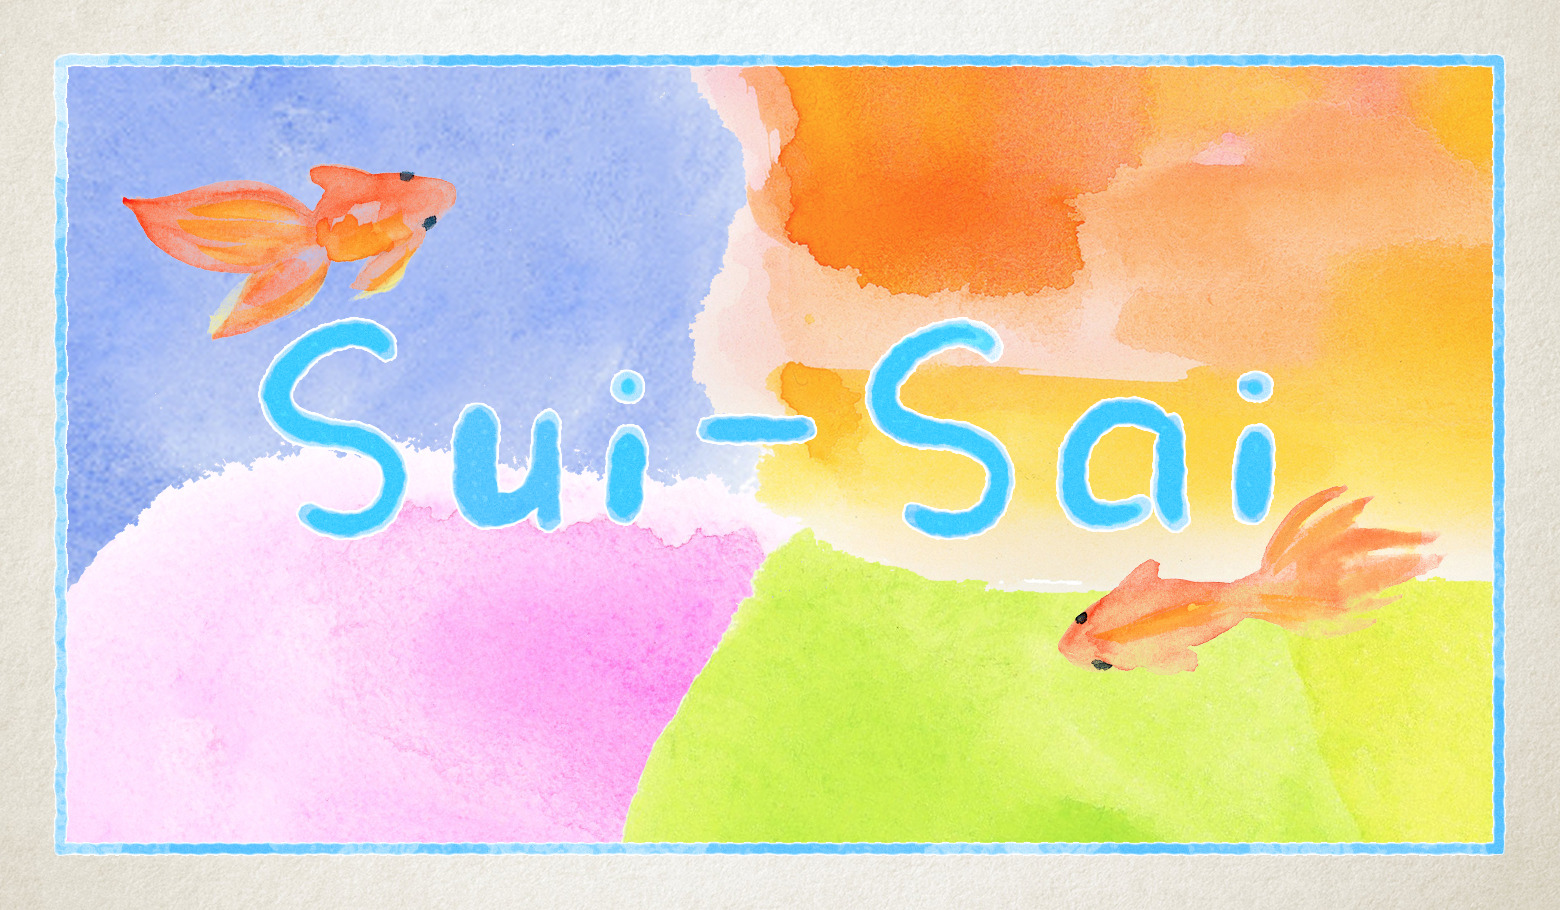 Sui-Sai｜水彩絵の具で描かれた無料イラスト素材サイト